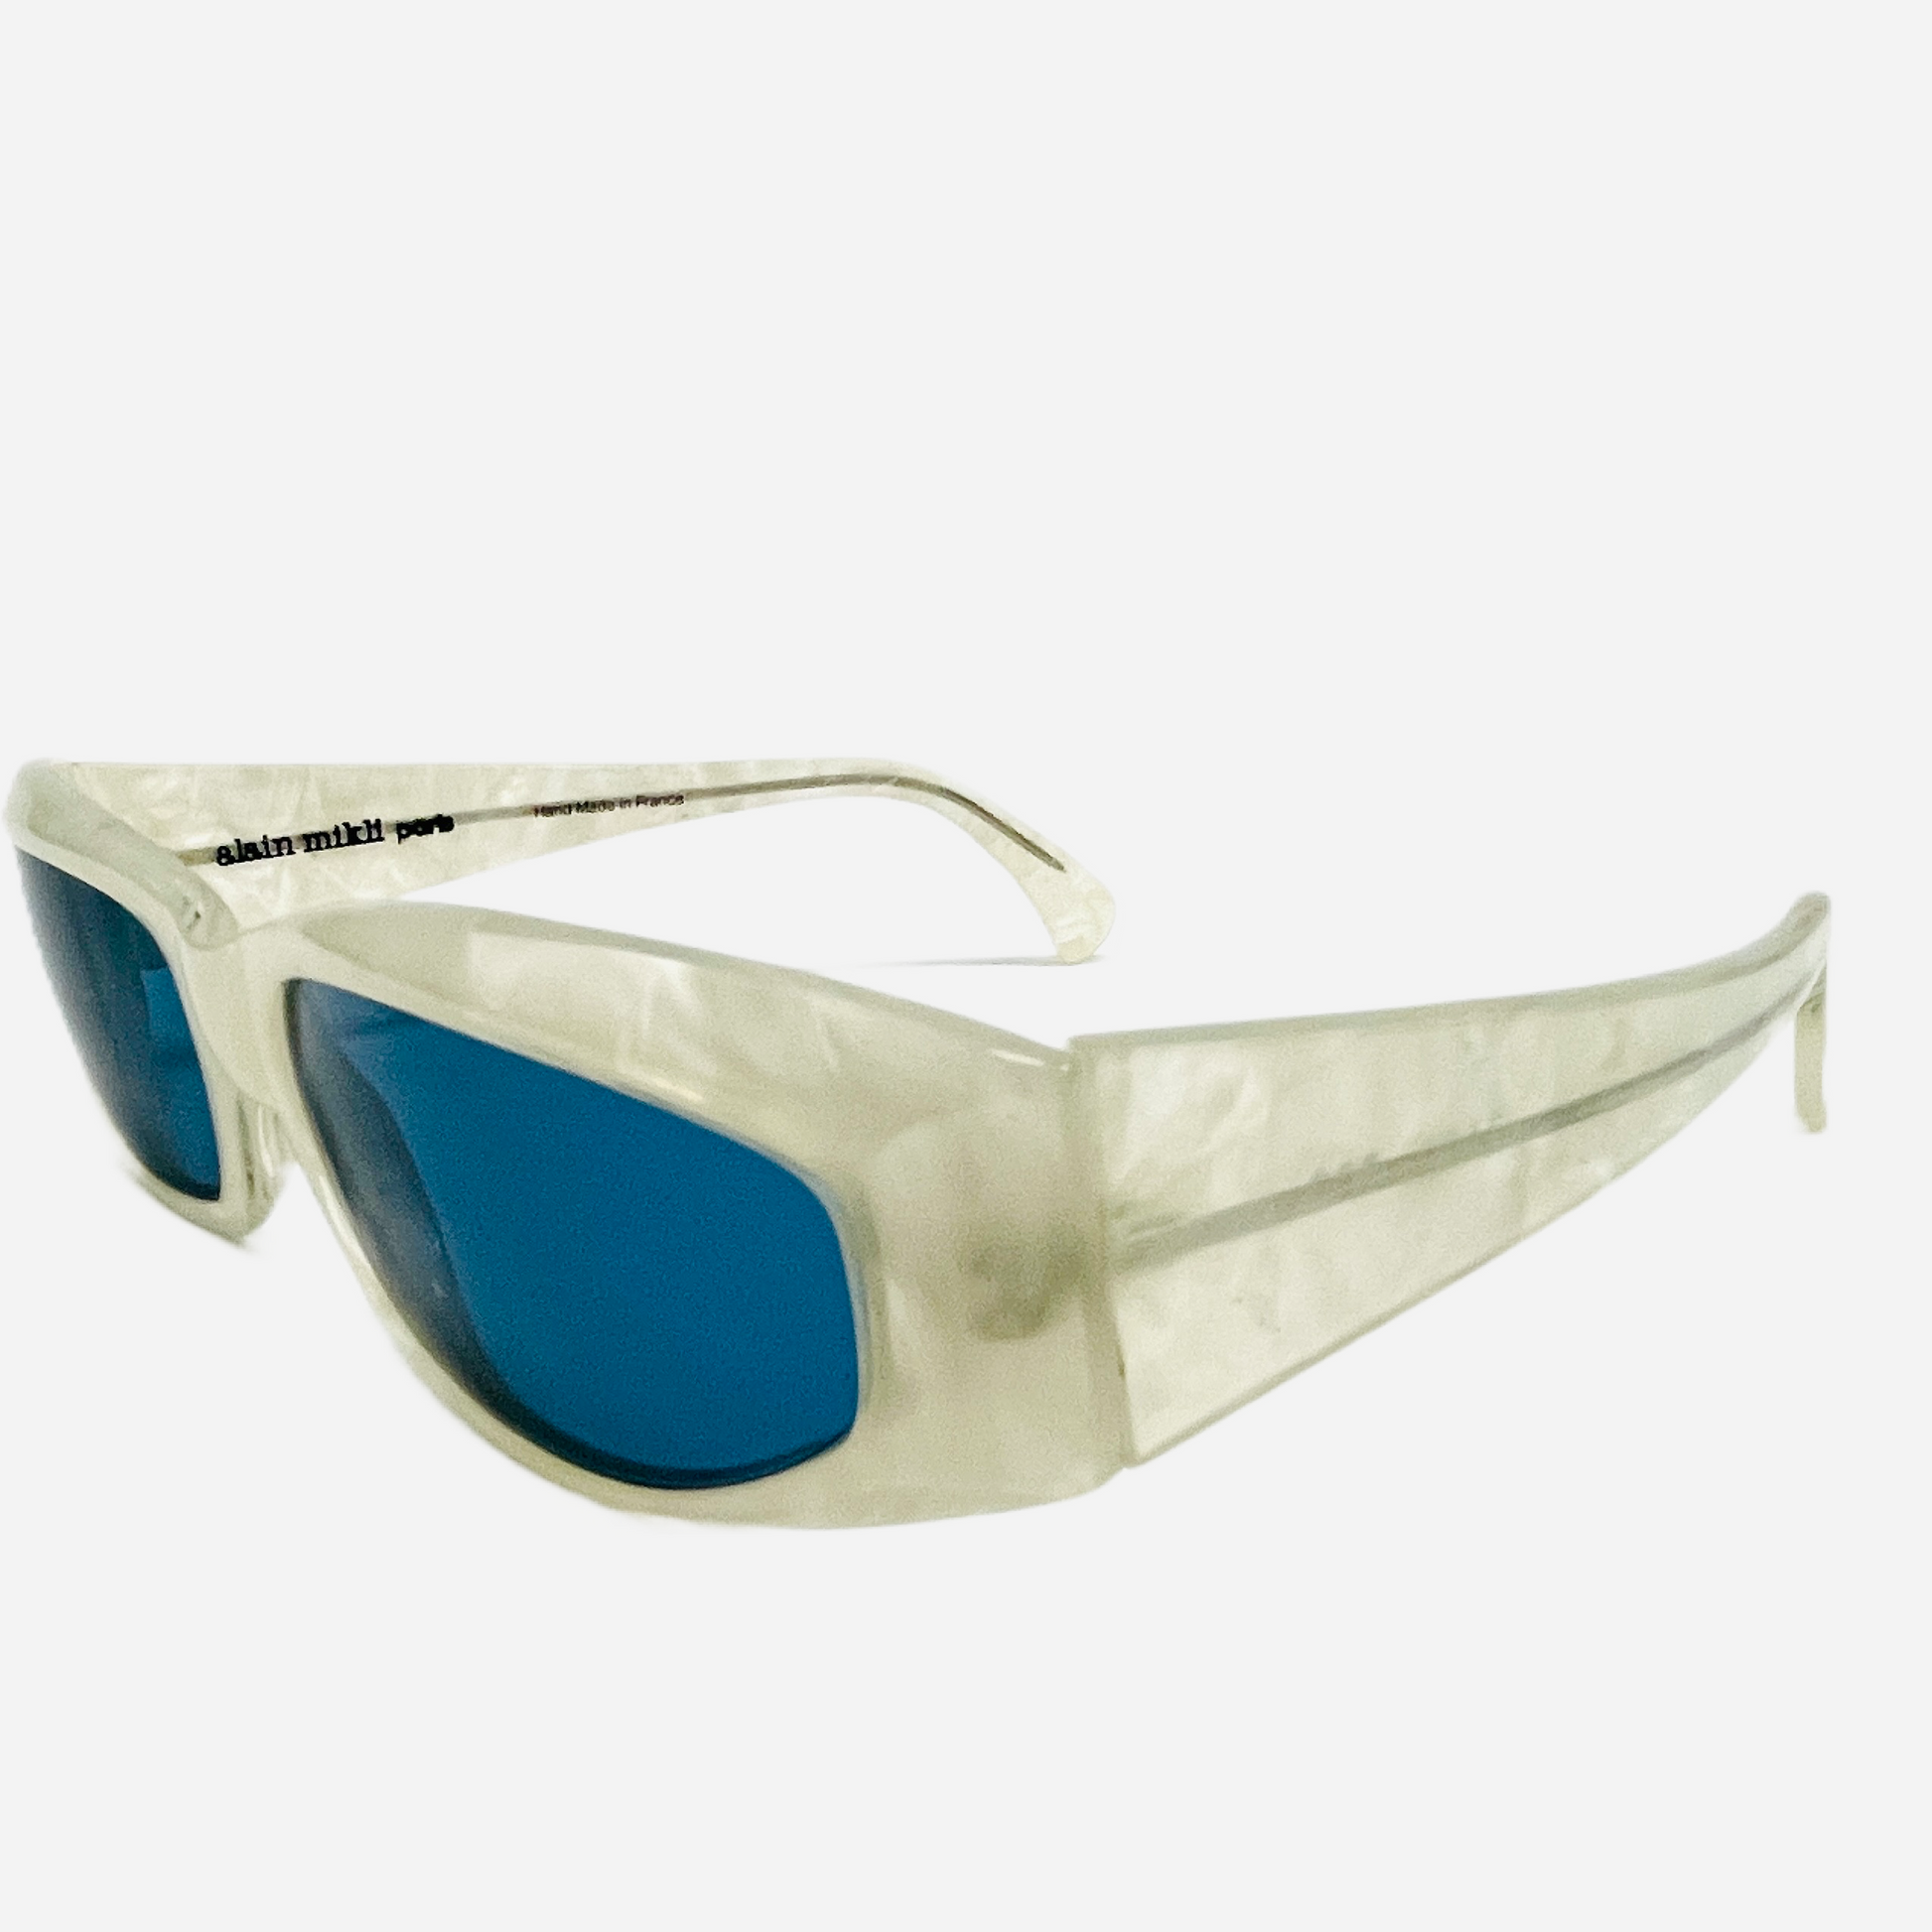 ALAIN-MIKLI-Sonnenbrille-Sunglasses-3101-809-Ansolet-side-schraeg